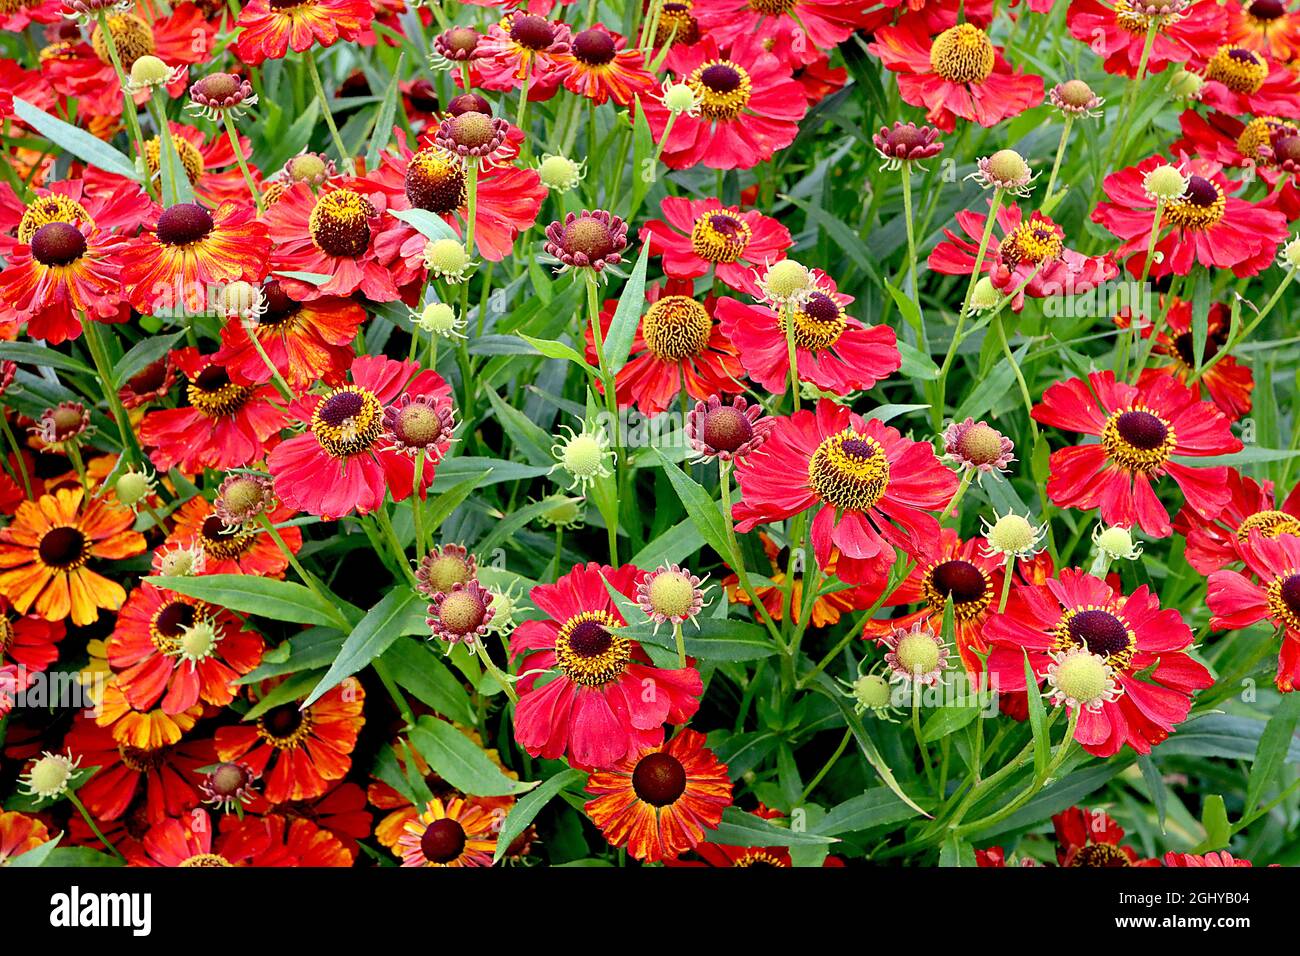 Helenium autumnale ‘Moerheim Beauty’ sneezeweed Moerheim Beauty – red flowers with notched petals,  August, England, UK Stock Photo